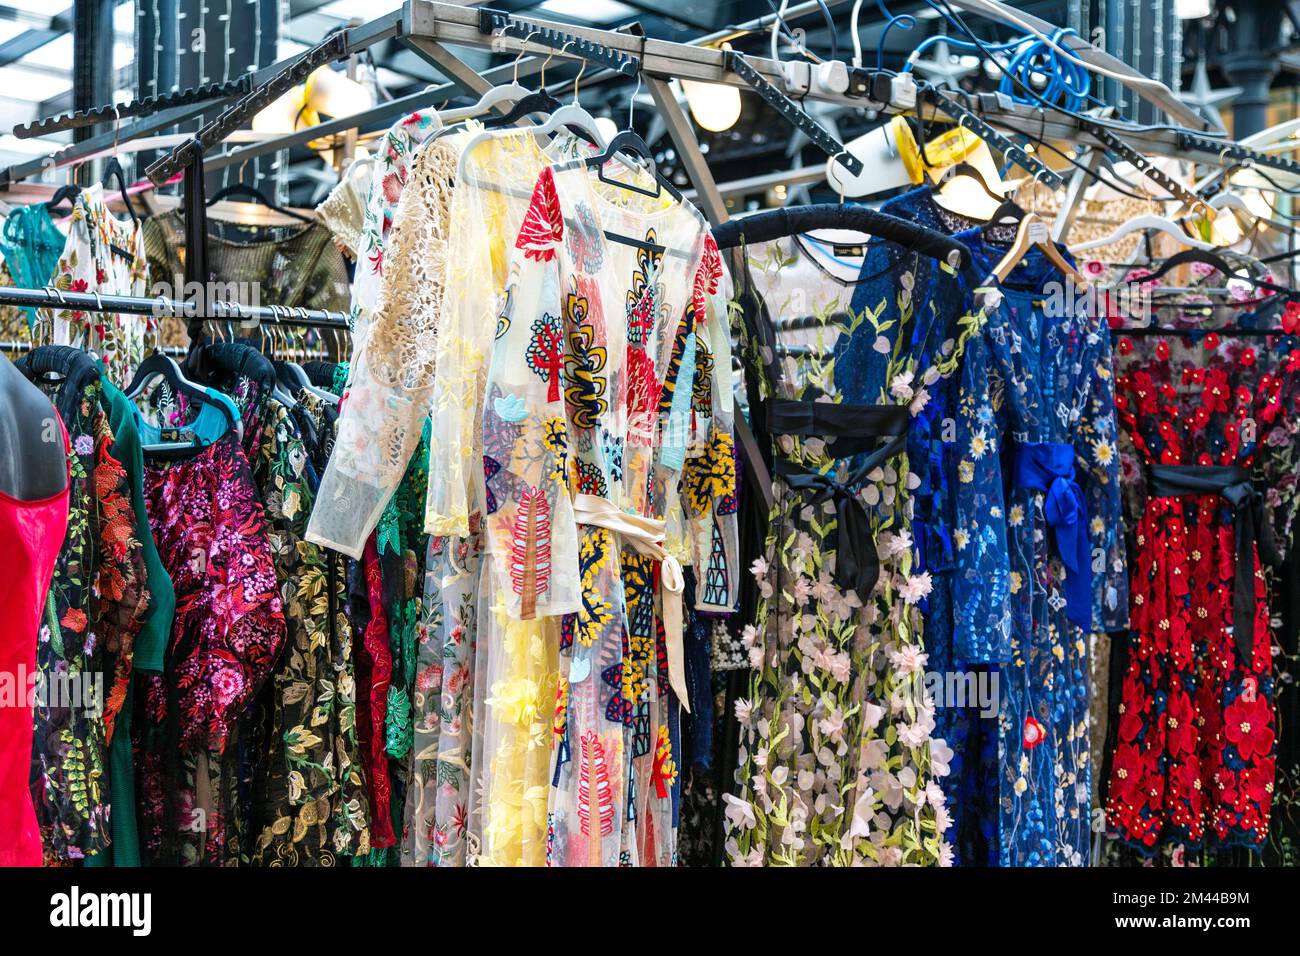 Quédese con coloridos vestidos en Spitalfields Market, Londres, Reino Unido Foto de stock